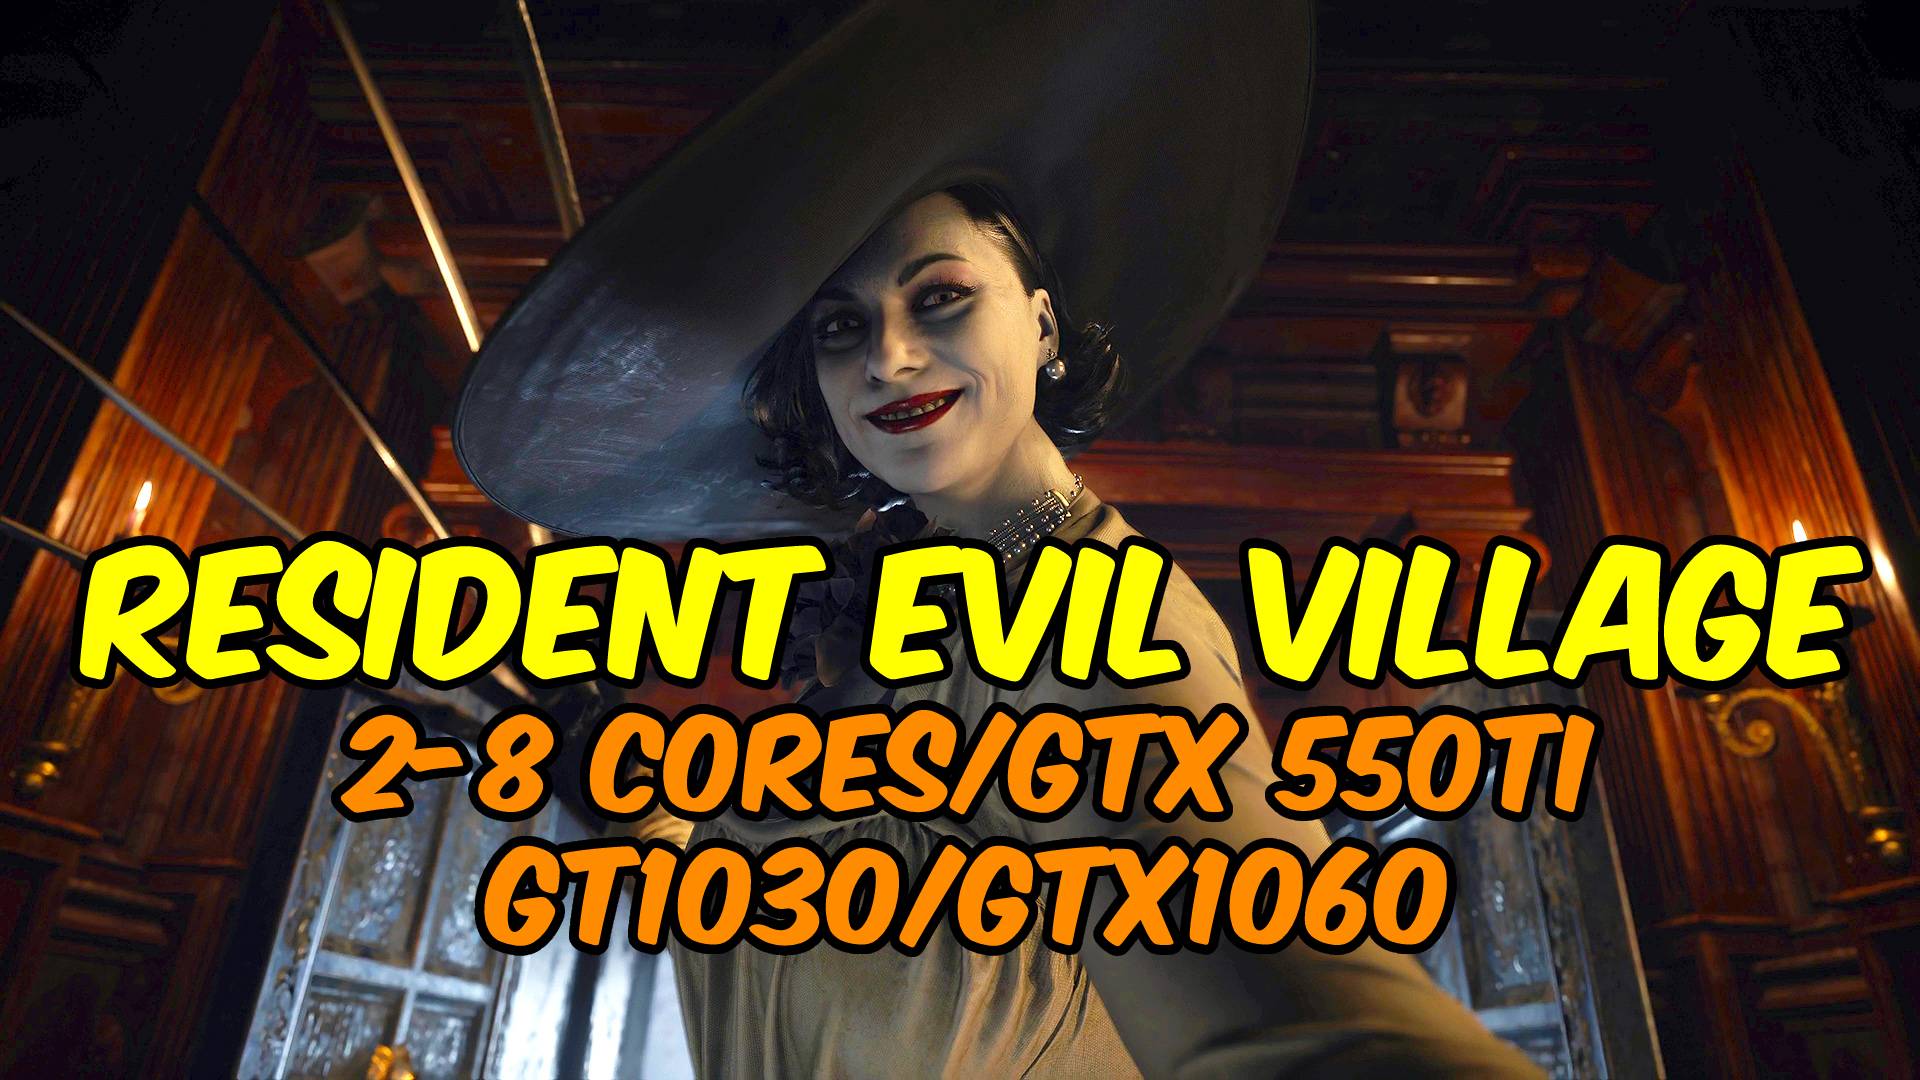 Resident Evil Village на слабом ПК 2-8 Cores/GTX 550Ti/GT1030/GTX1060